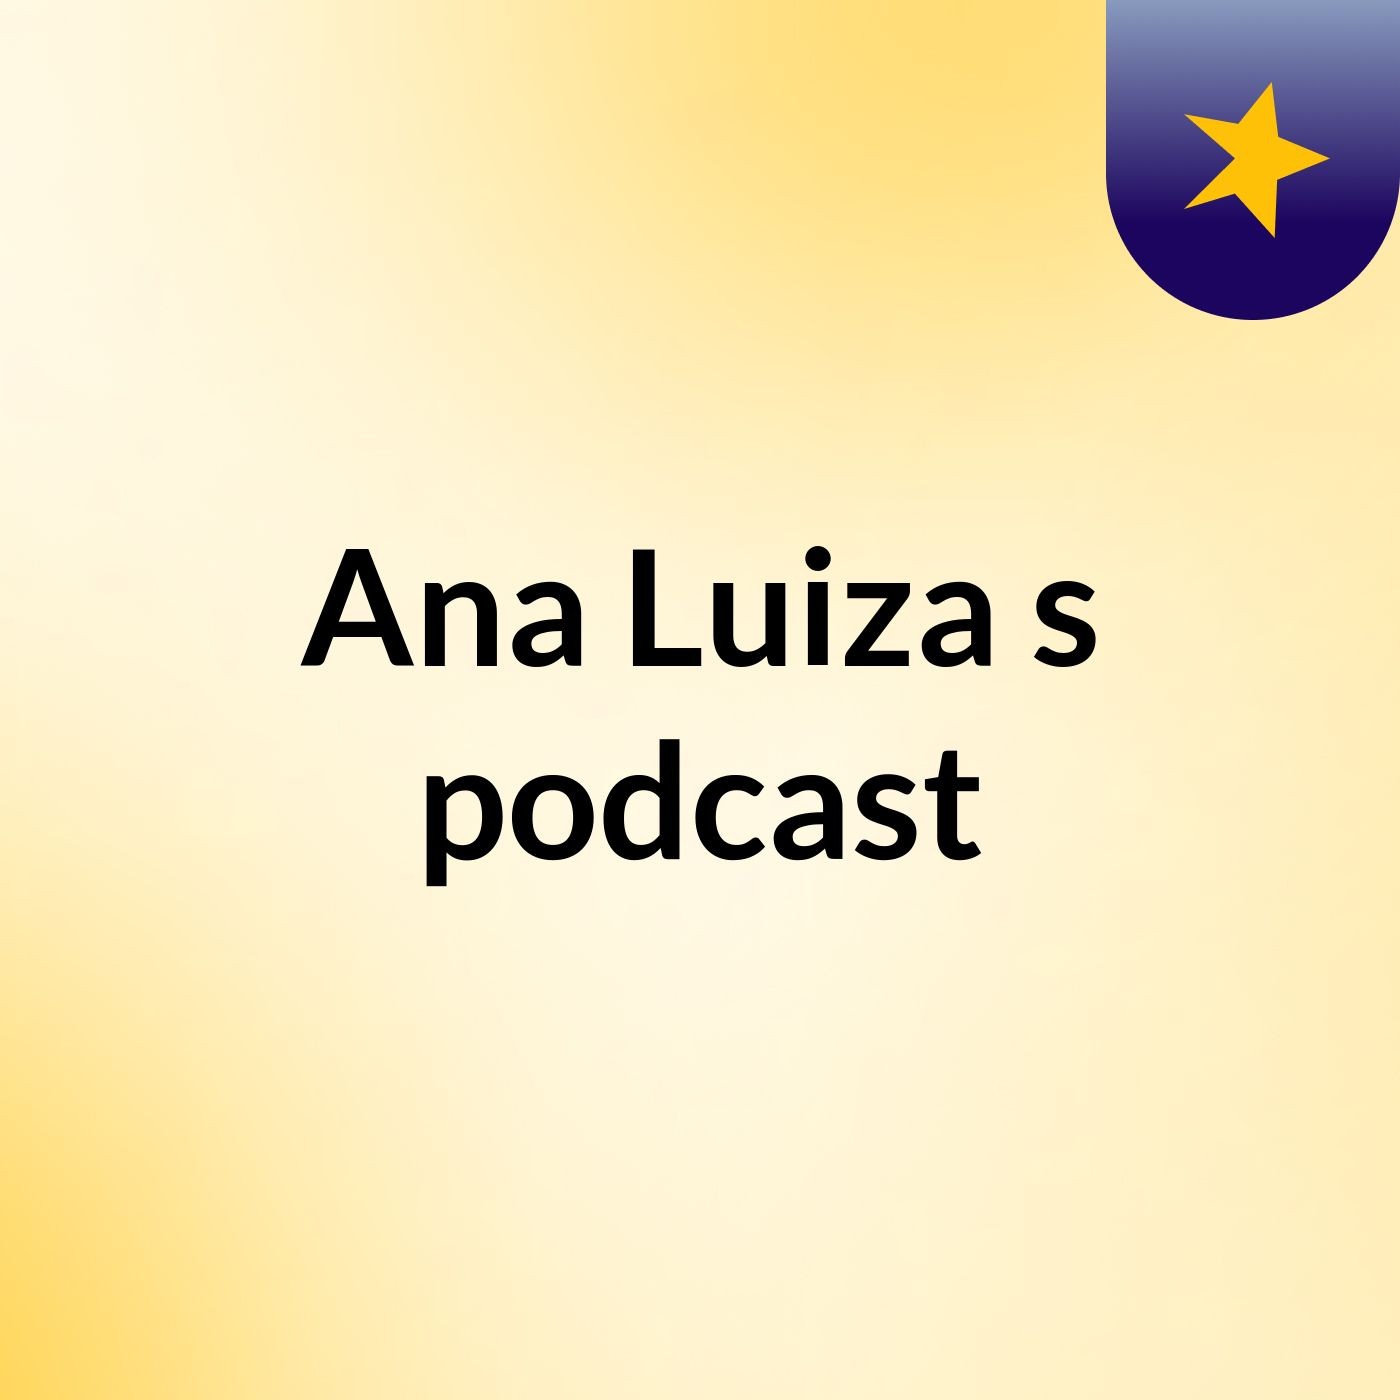 Ana Luiza's podcast